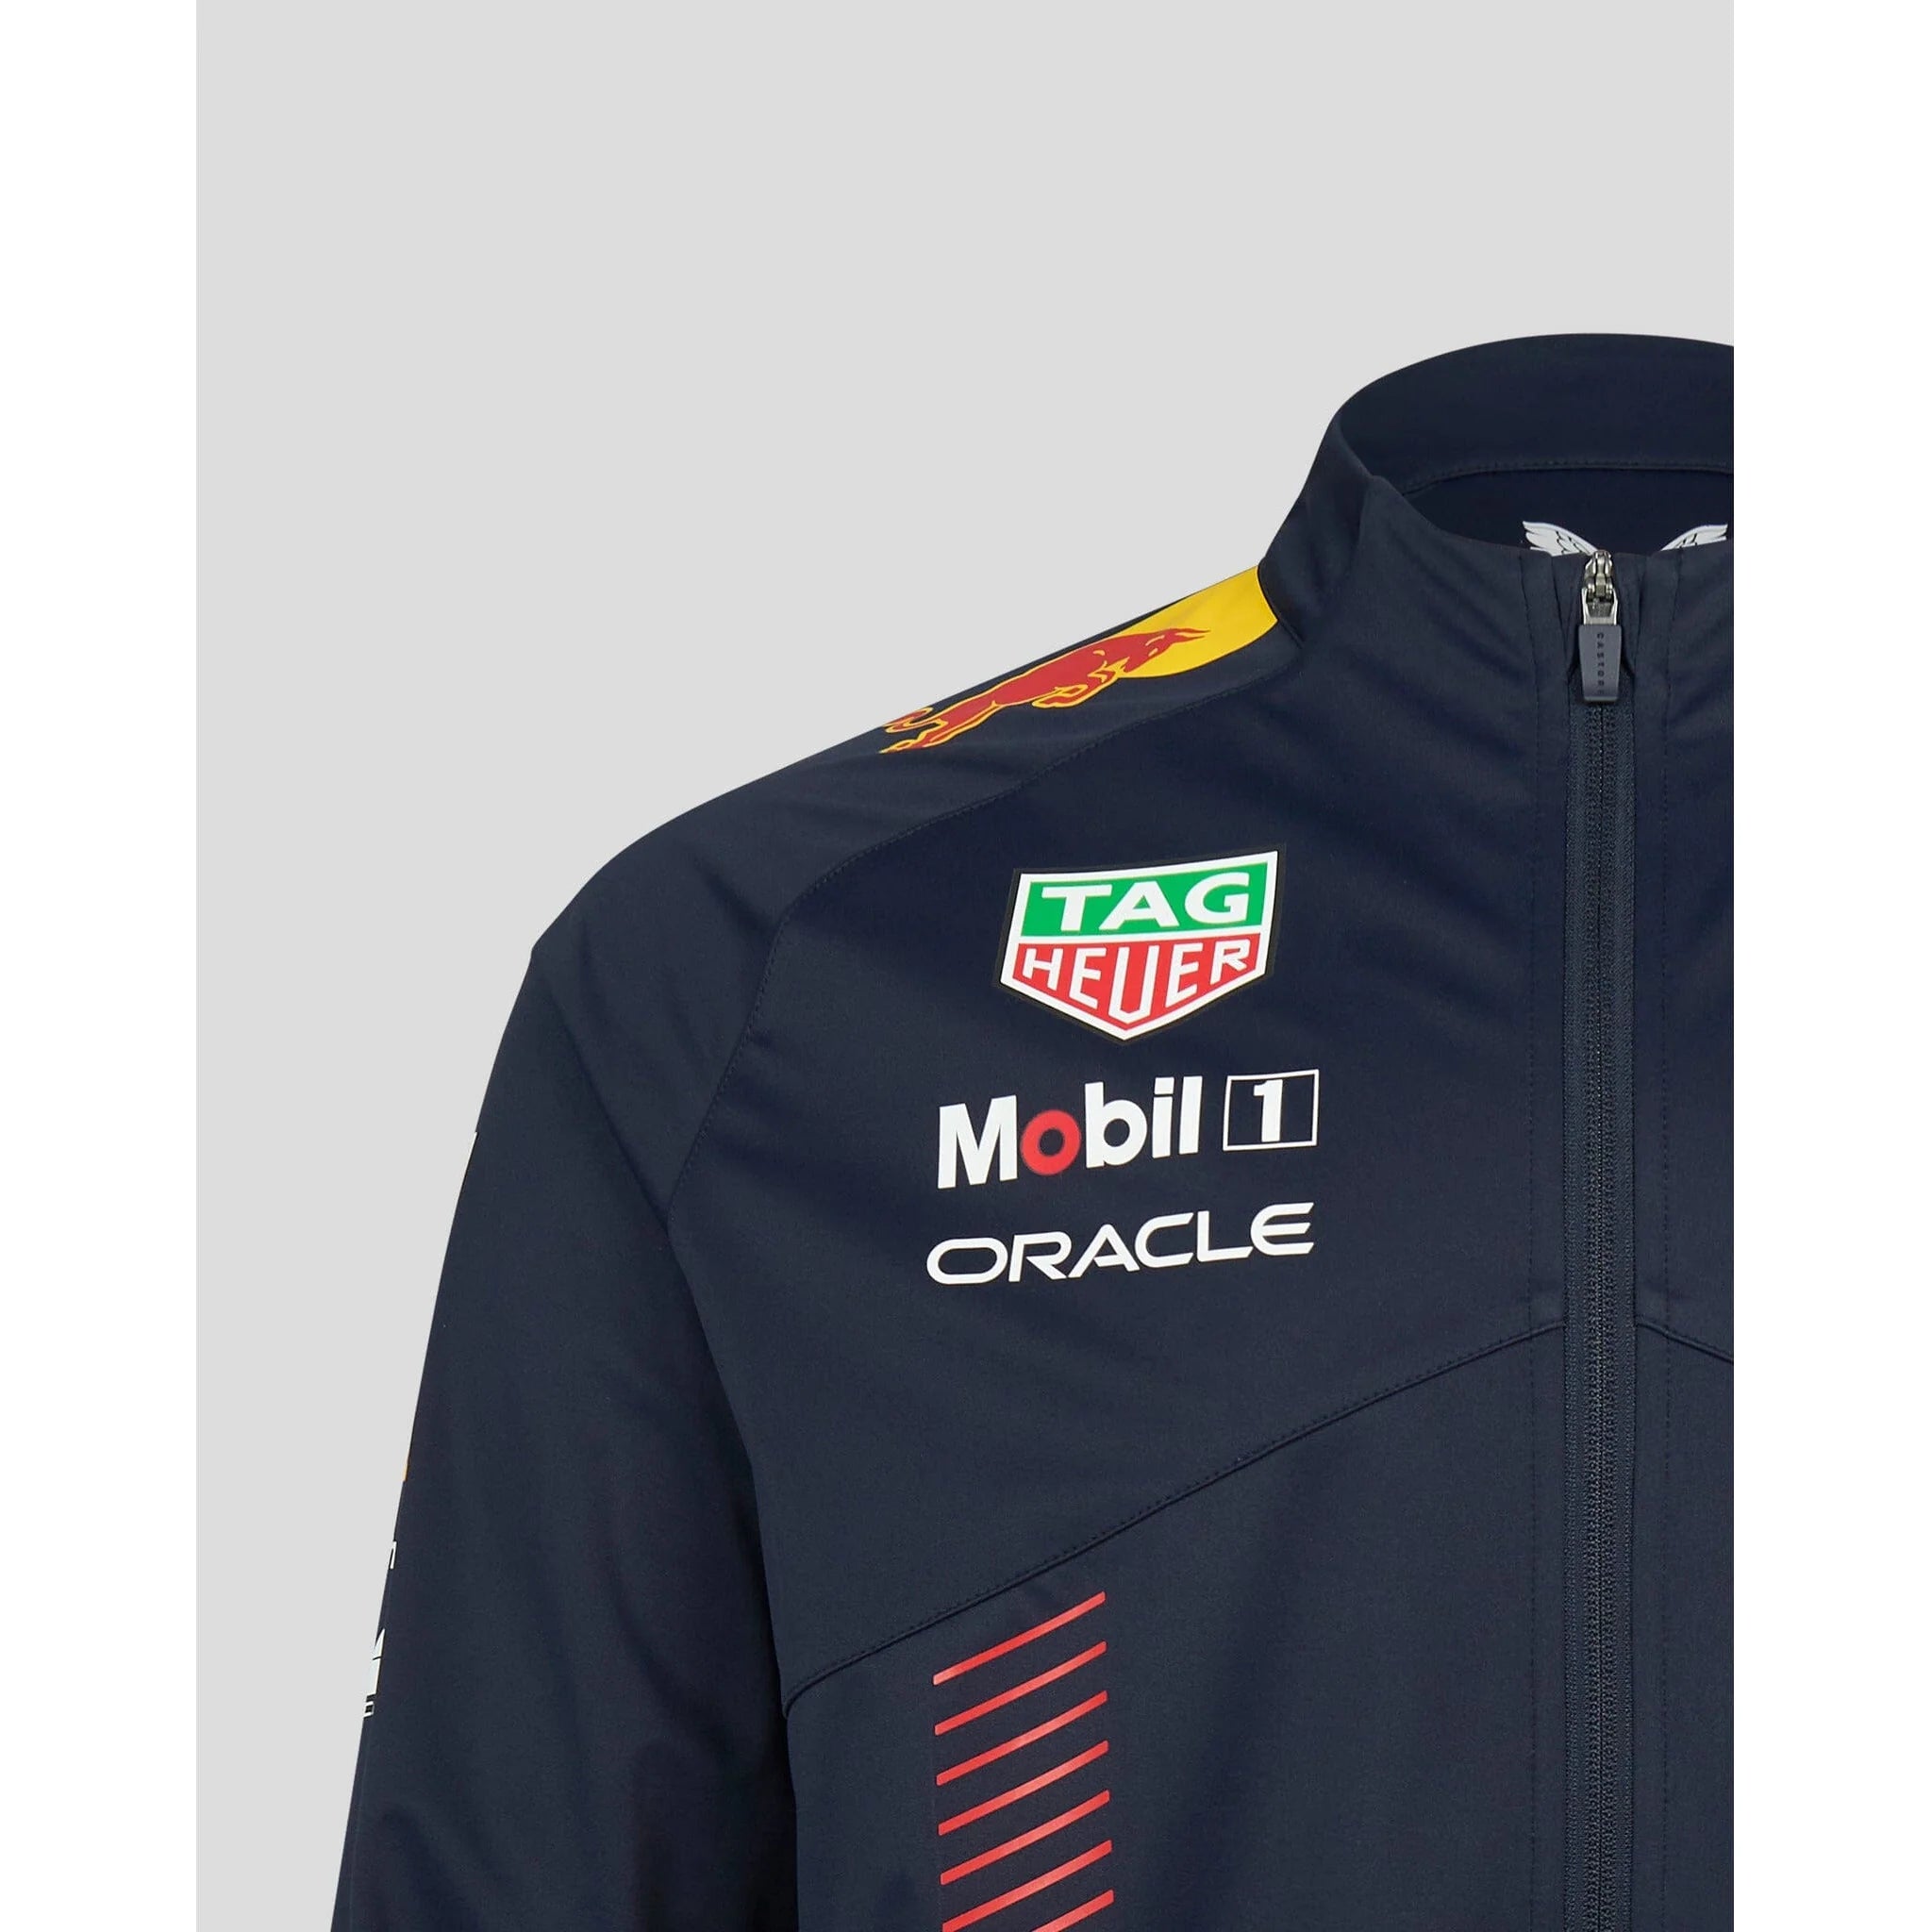 Veste Softshell KTM Red Bull Team Jacket